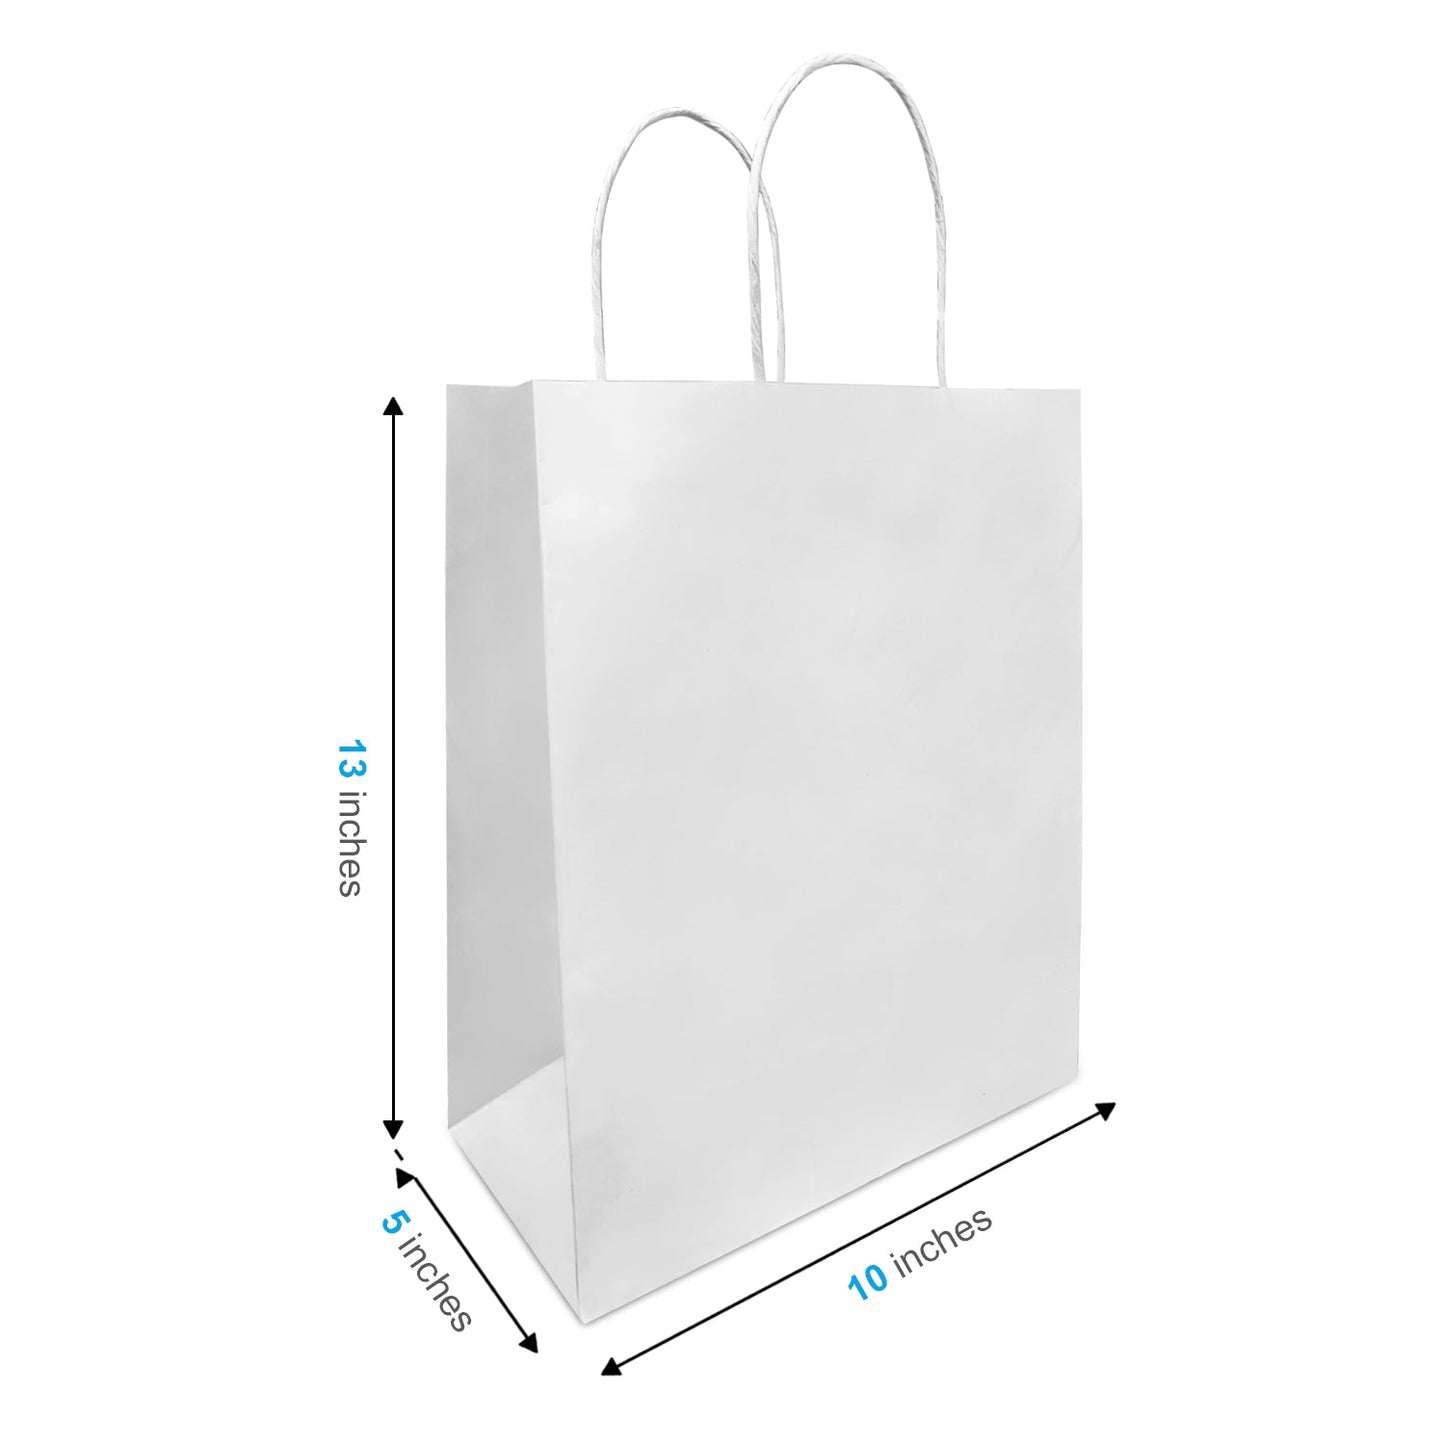 Debbie 10x5x13 White Kraft Paper Bags Twisted Handles, $1.025/pc, 50pcs/bundle, sold by bundle